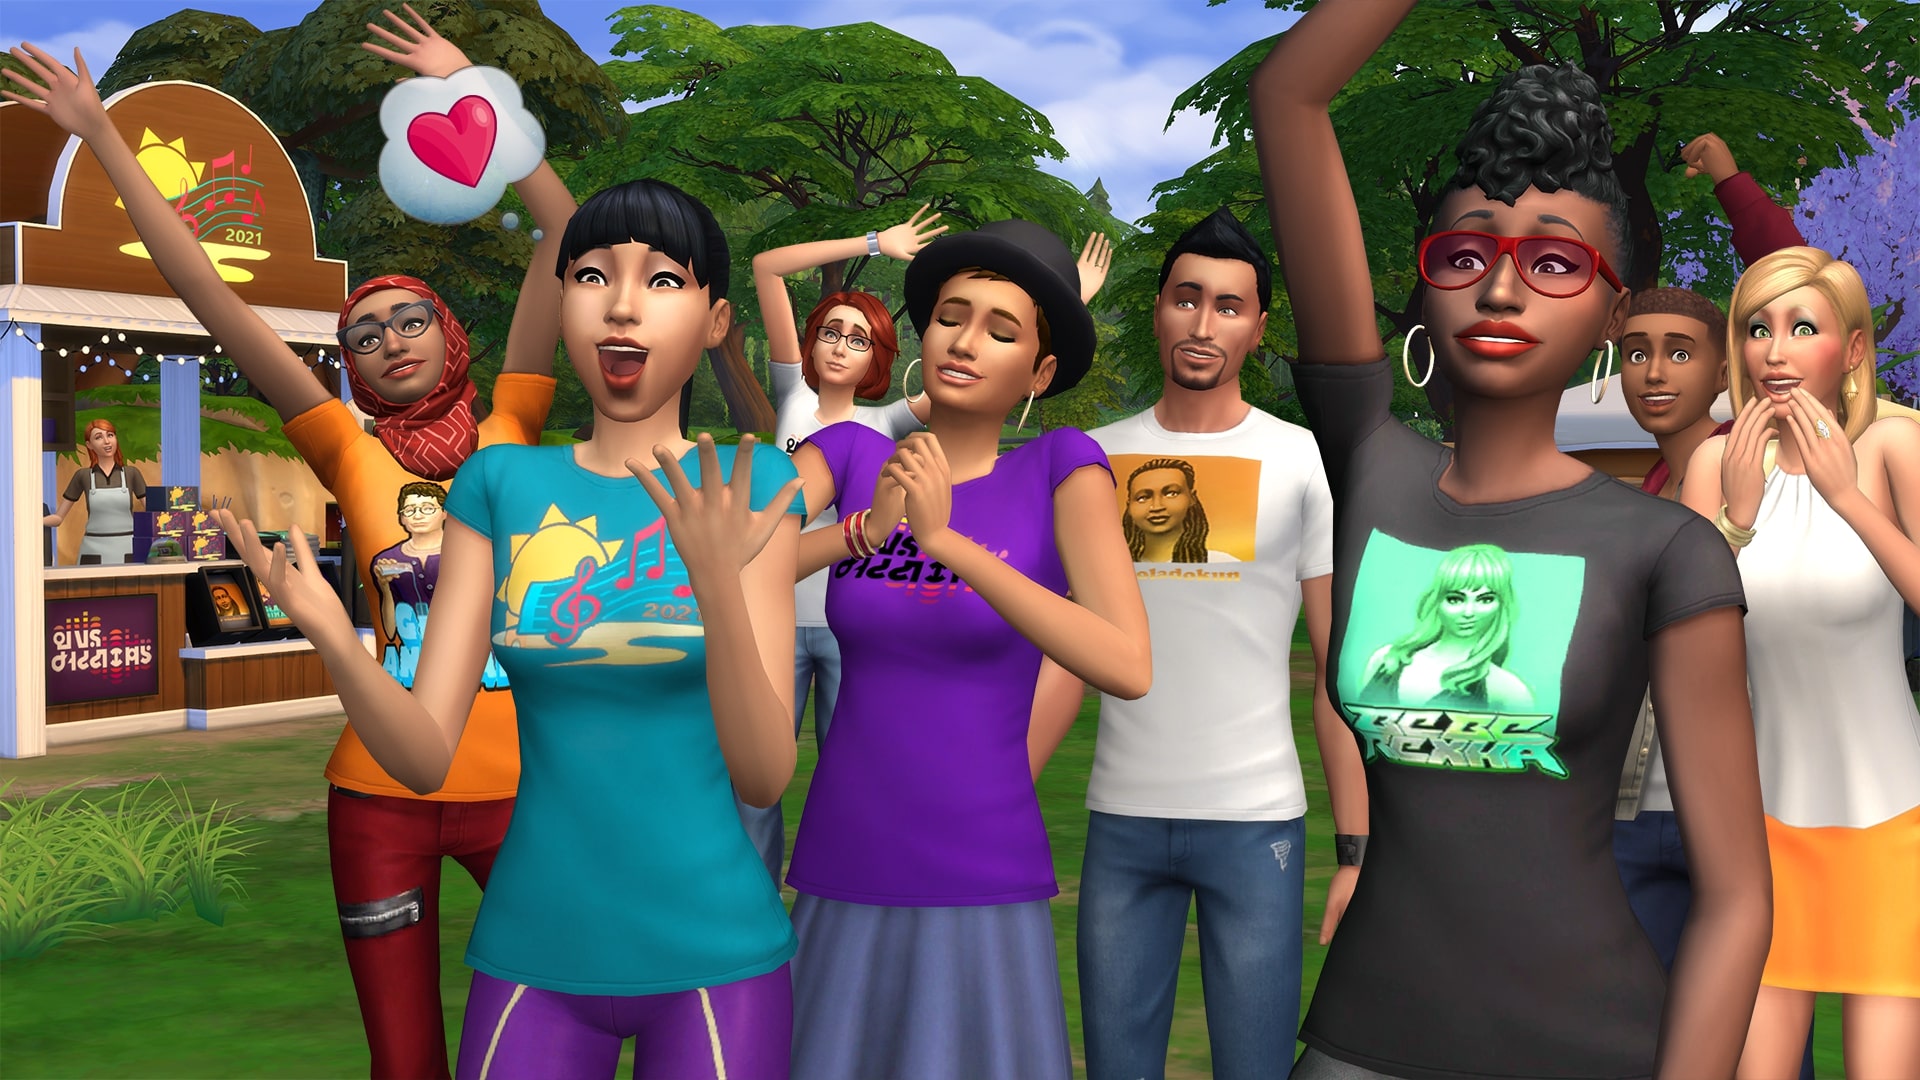 New Sims 5 Details Revealed in Developer Update - Insider Gaming